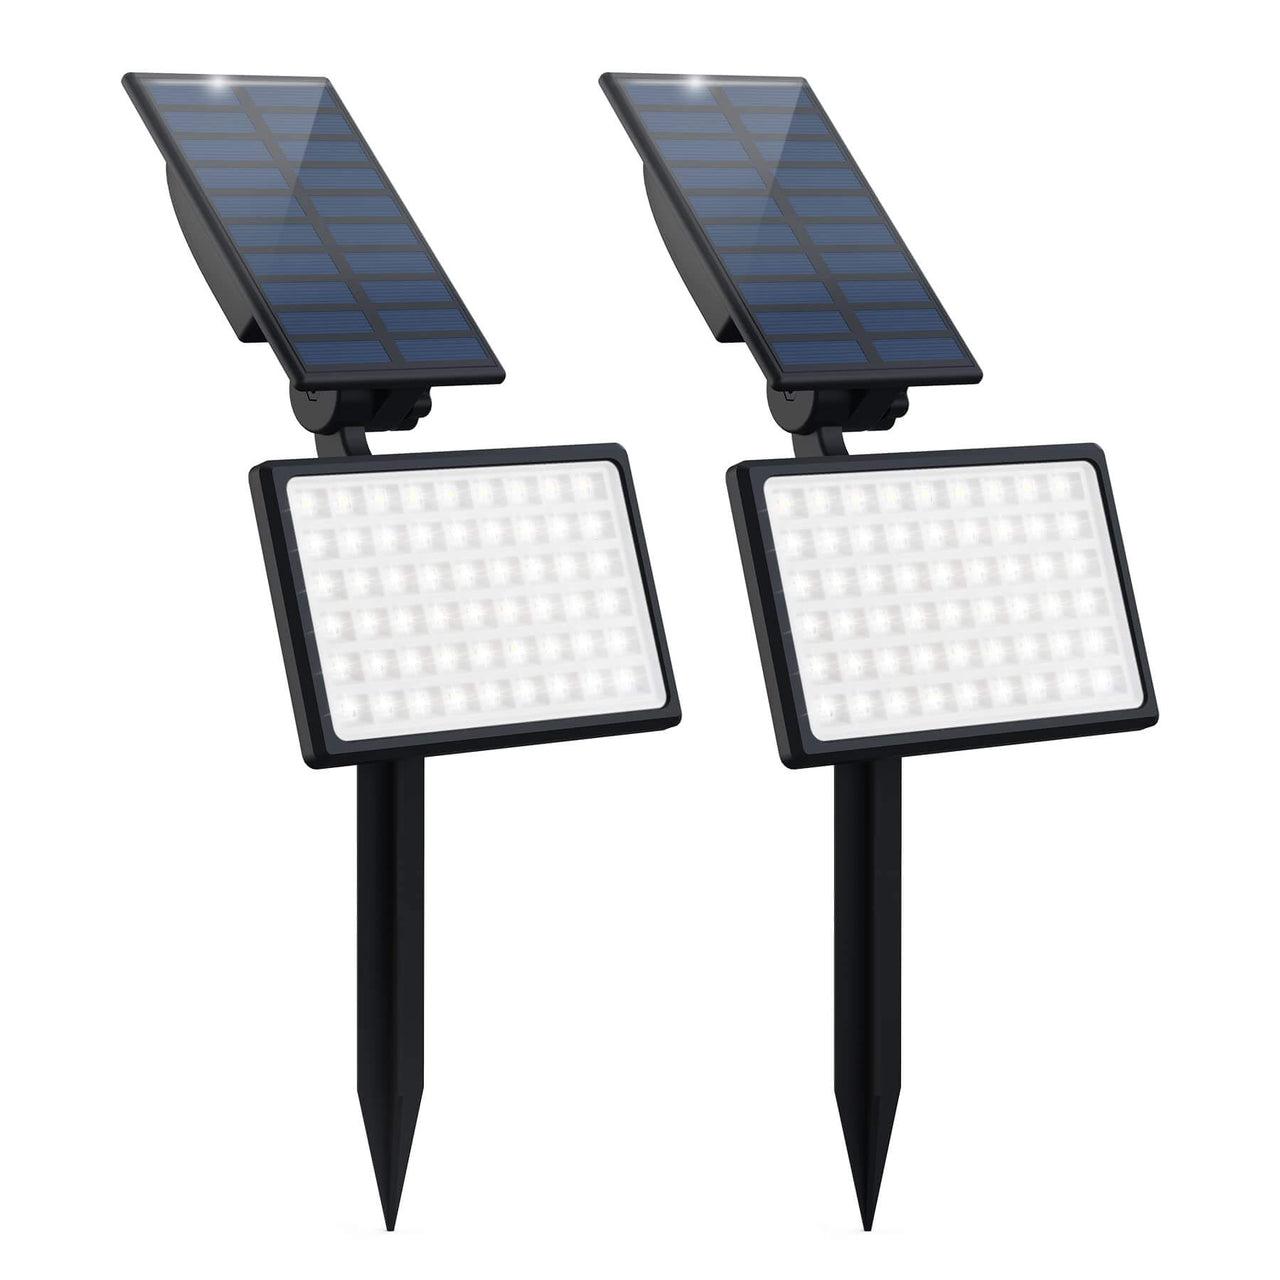 TSUN 54 LEDs Solar Flood Lights